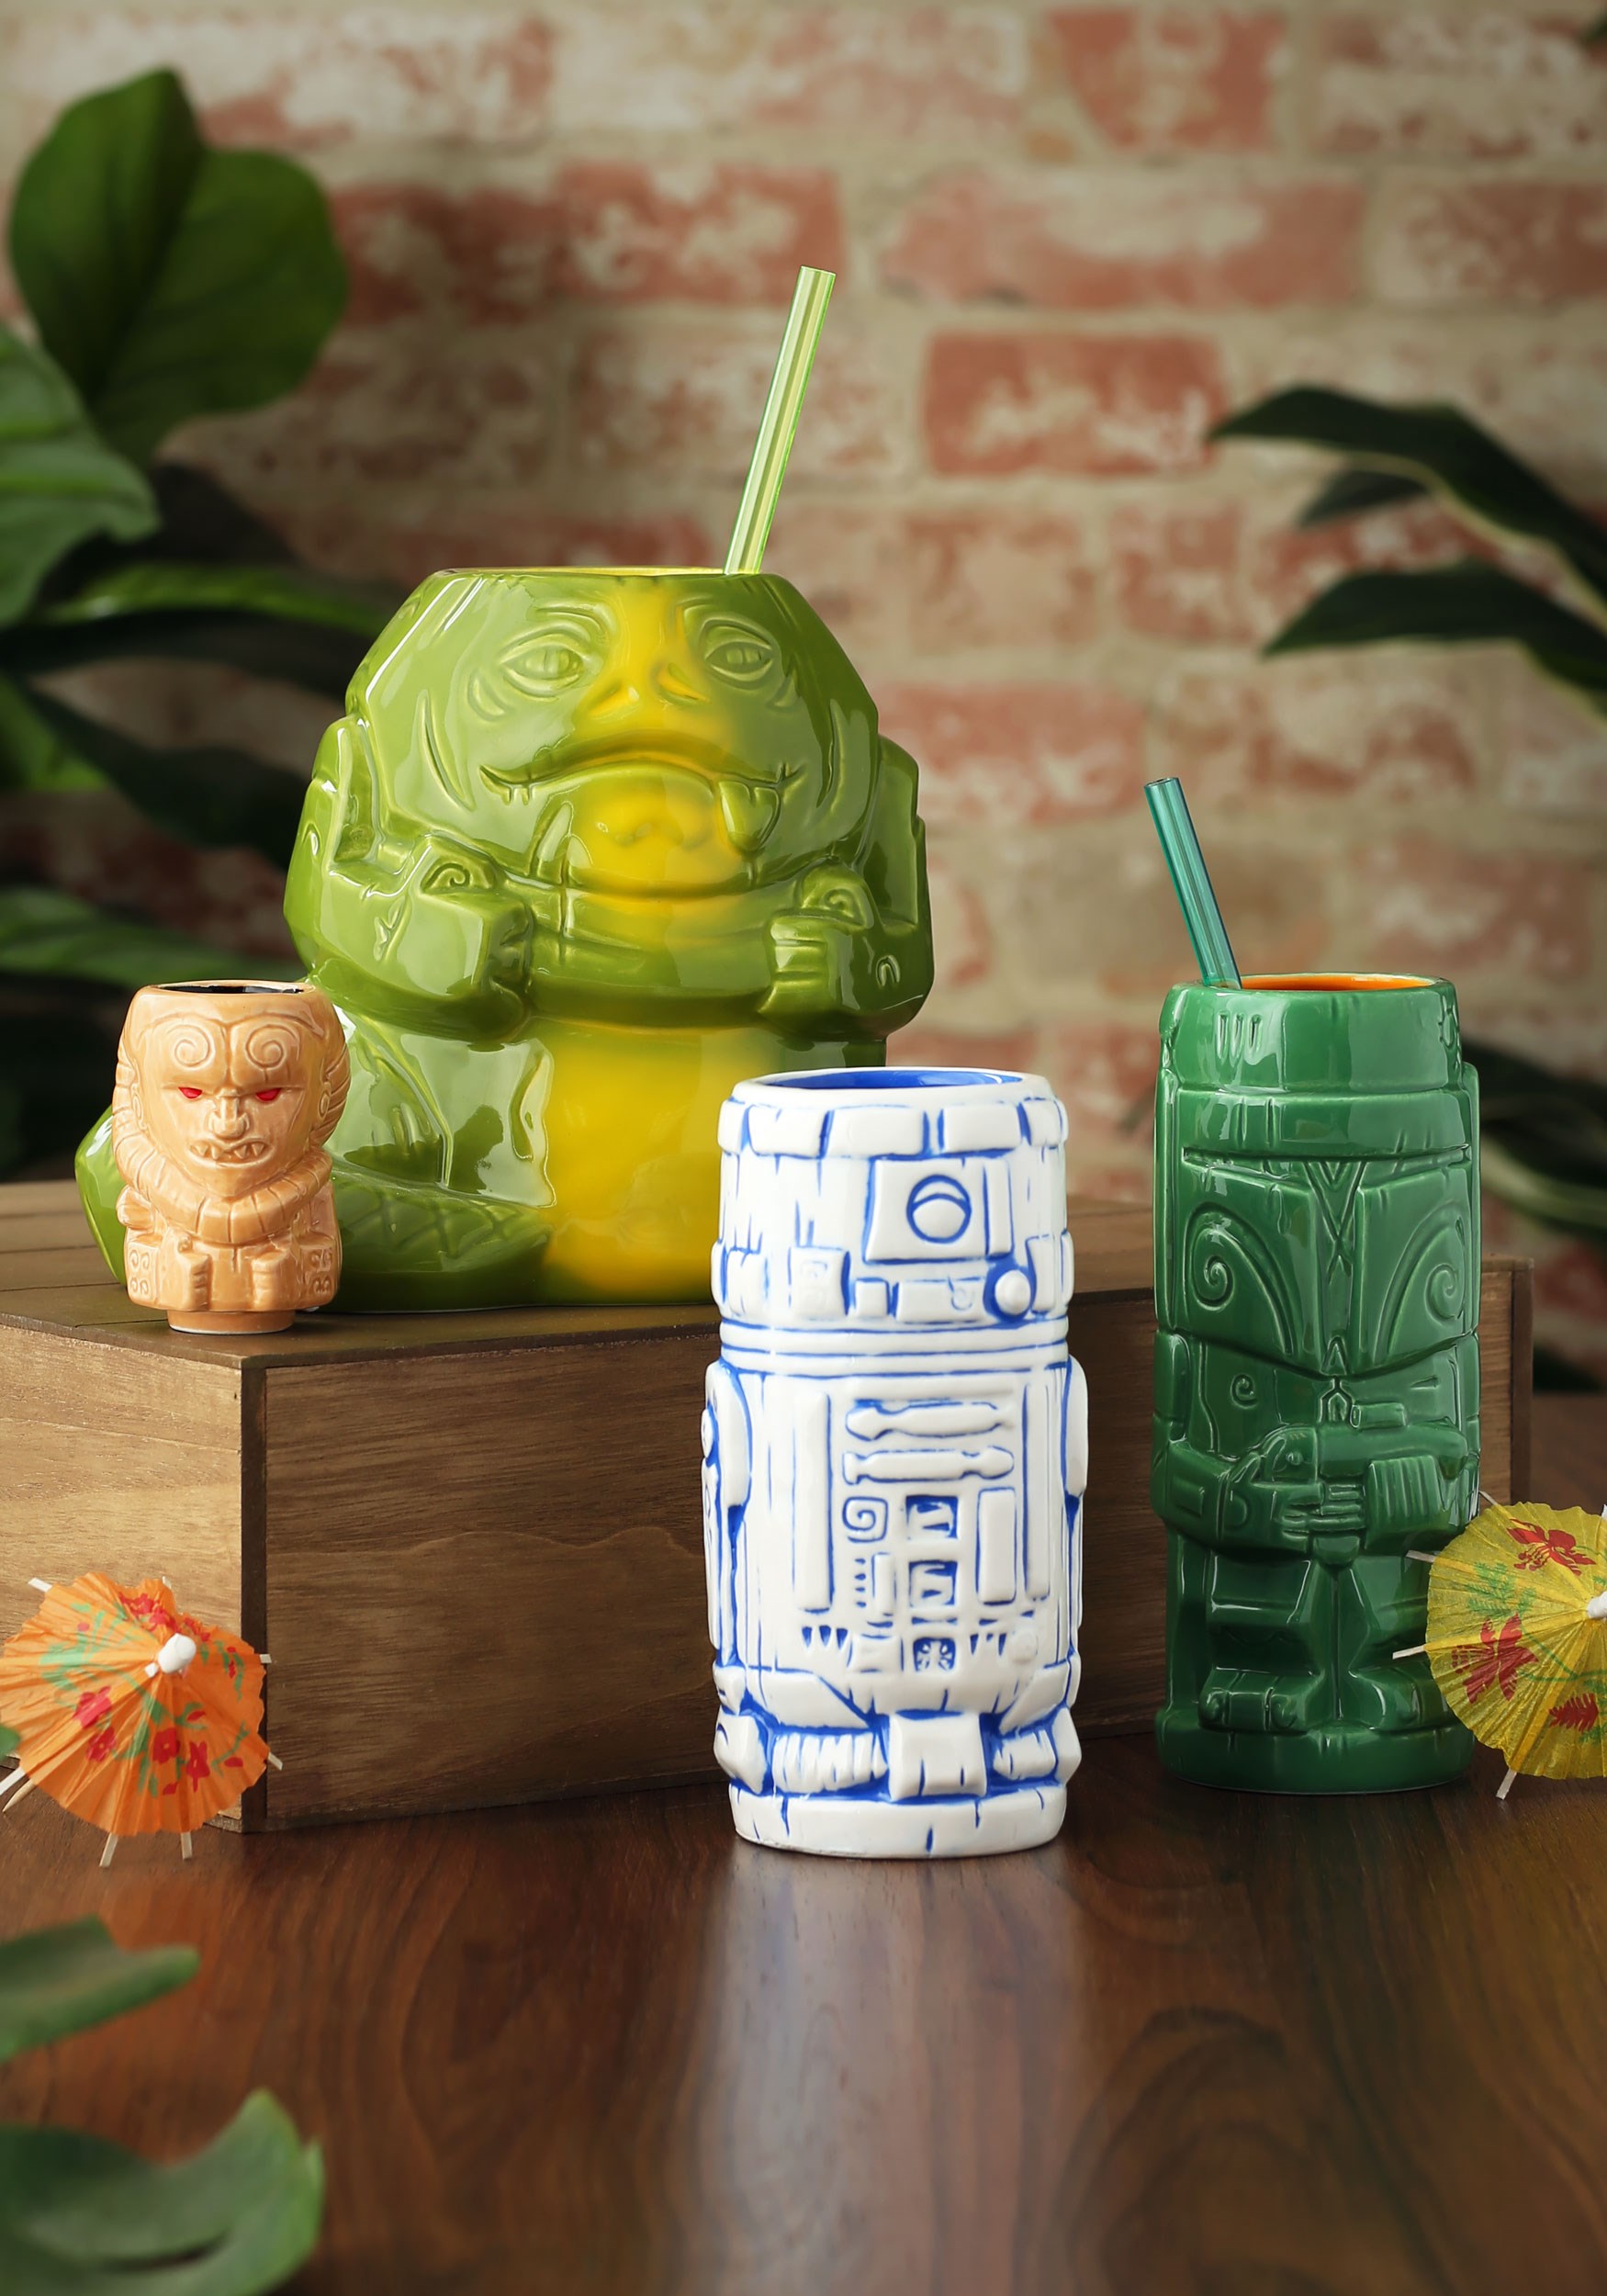  Geeki Tikis Star Wars Boba Fett Mug, Ceramic Tiki Style Cup